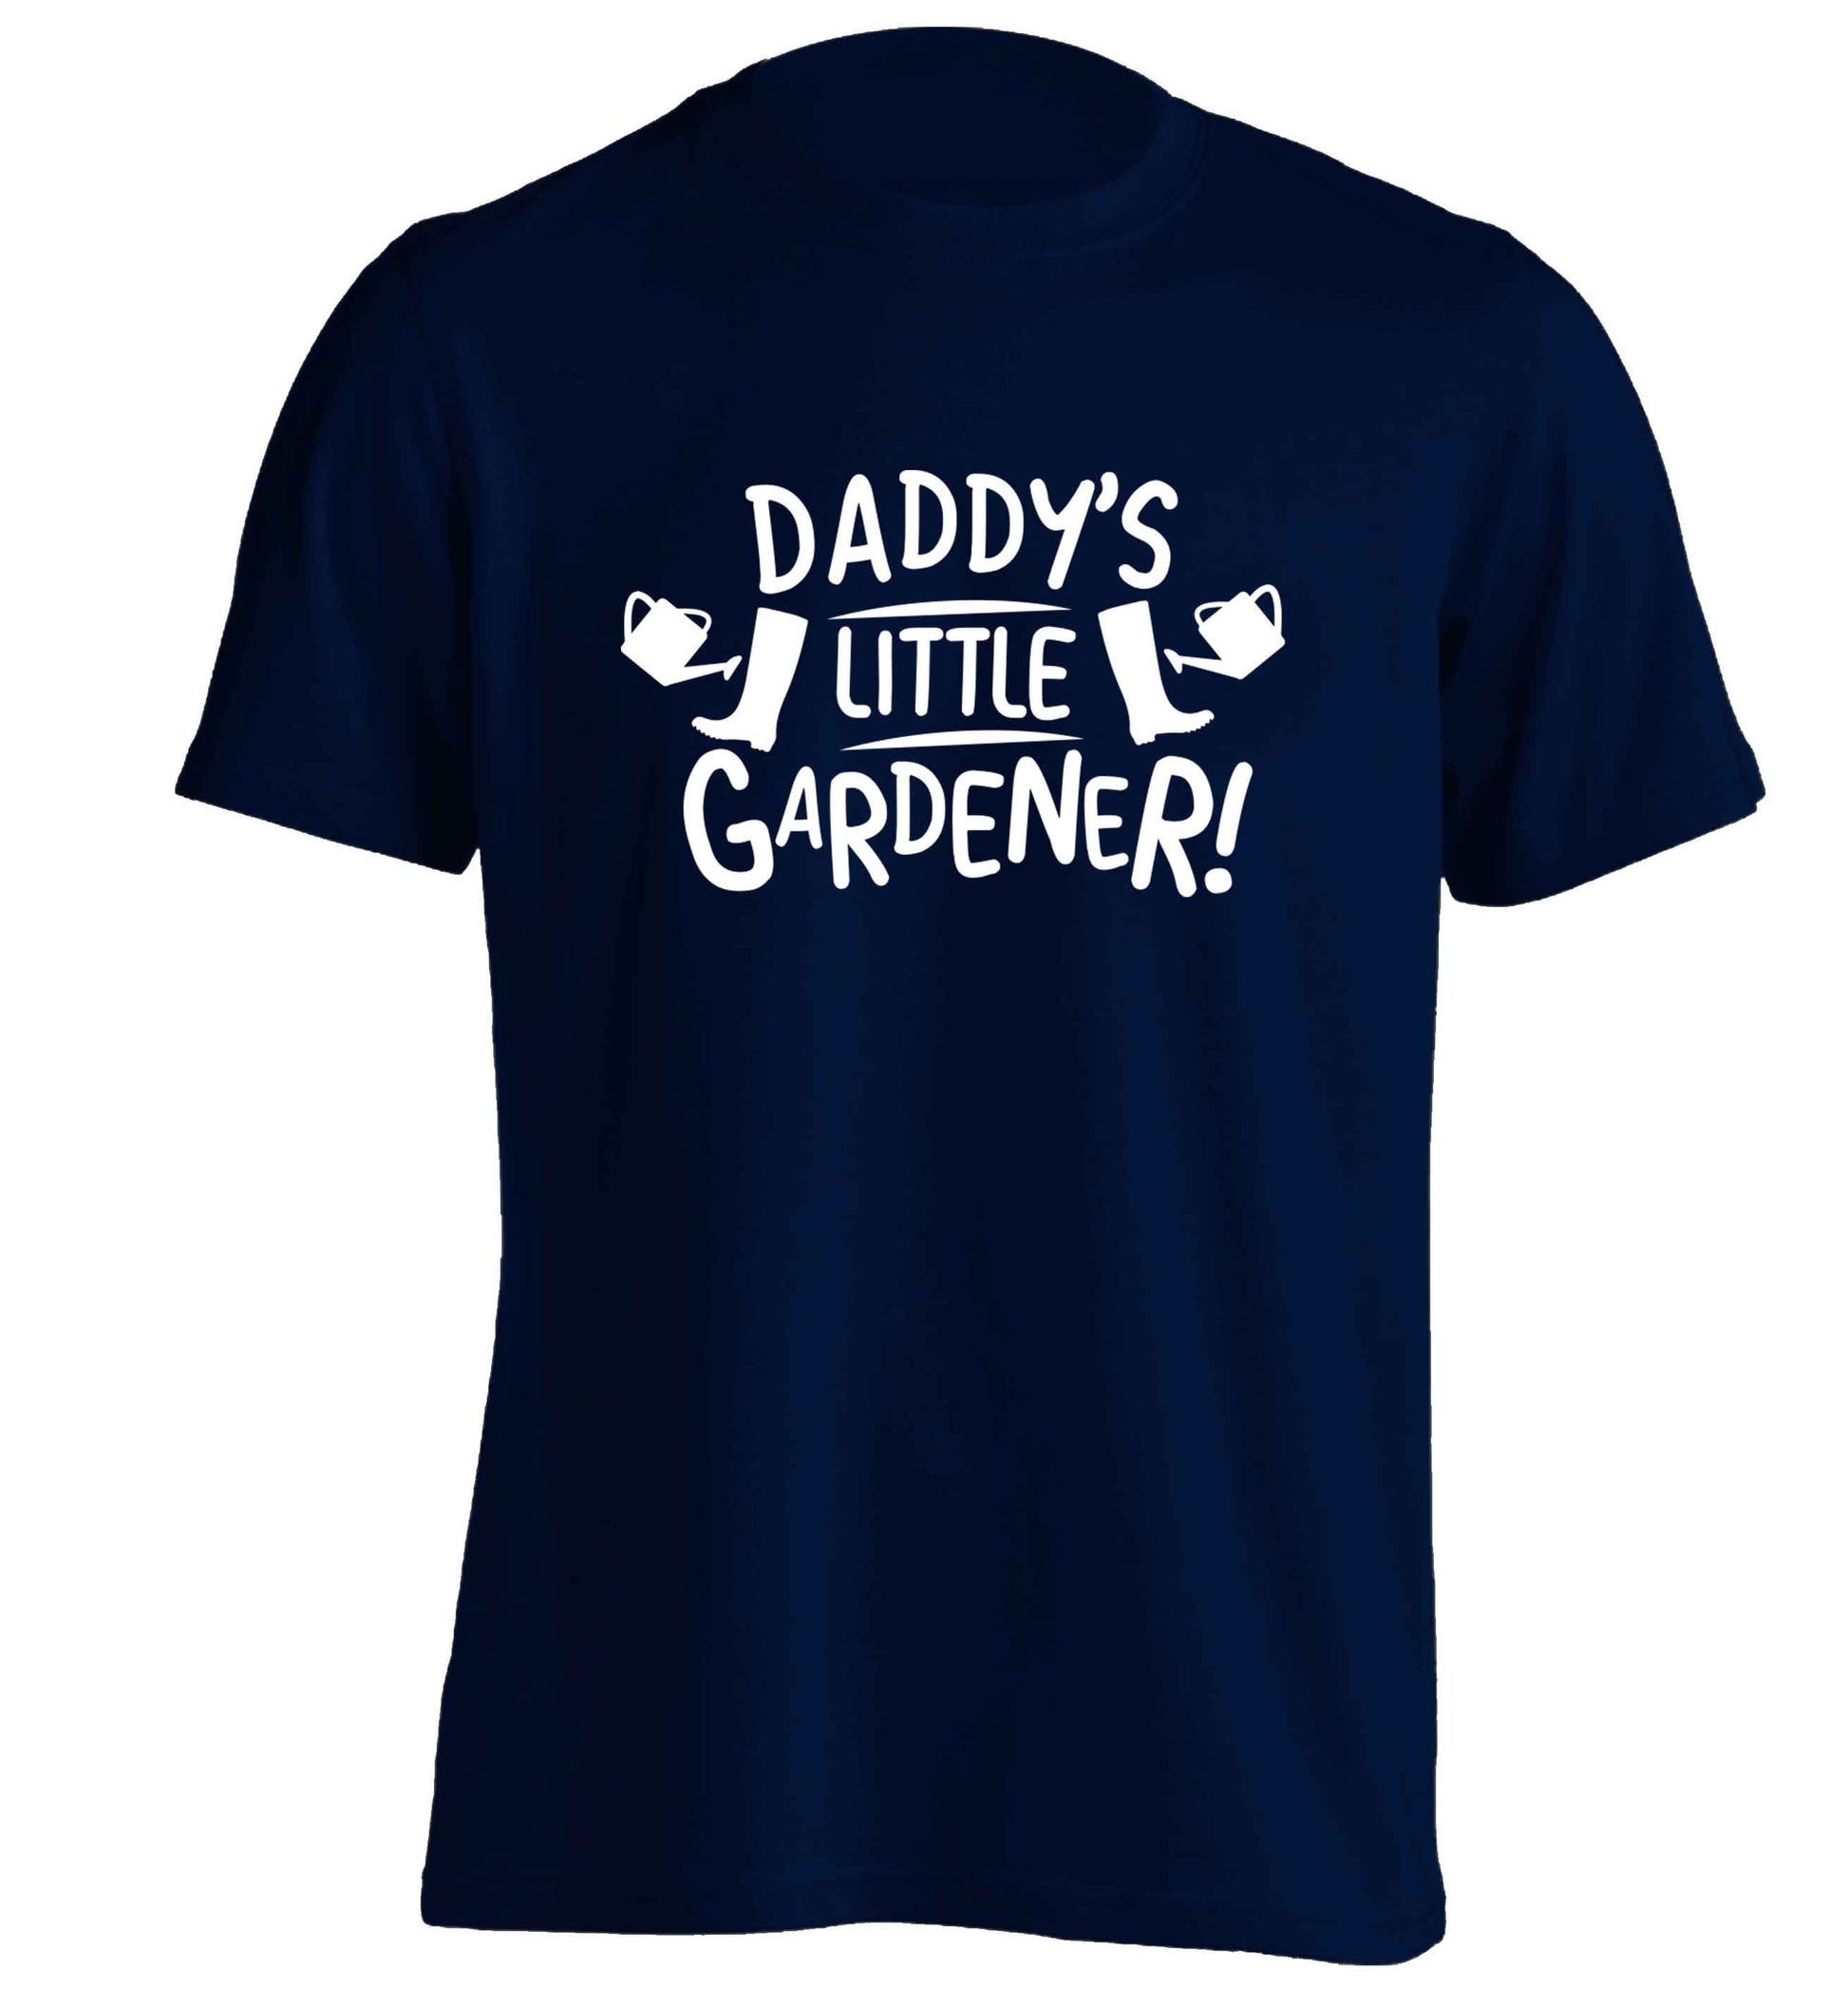 Daddy's little gardener adults unisex navy Tshirt 2XL